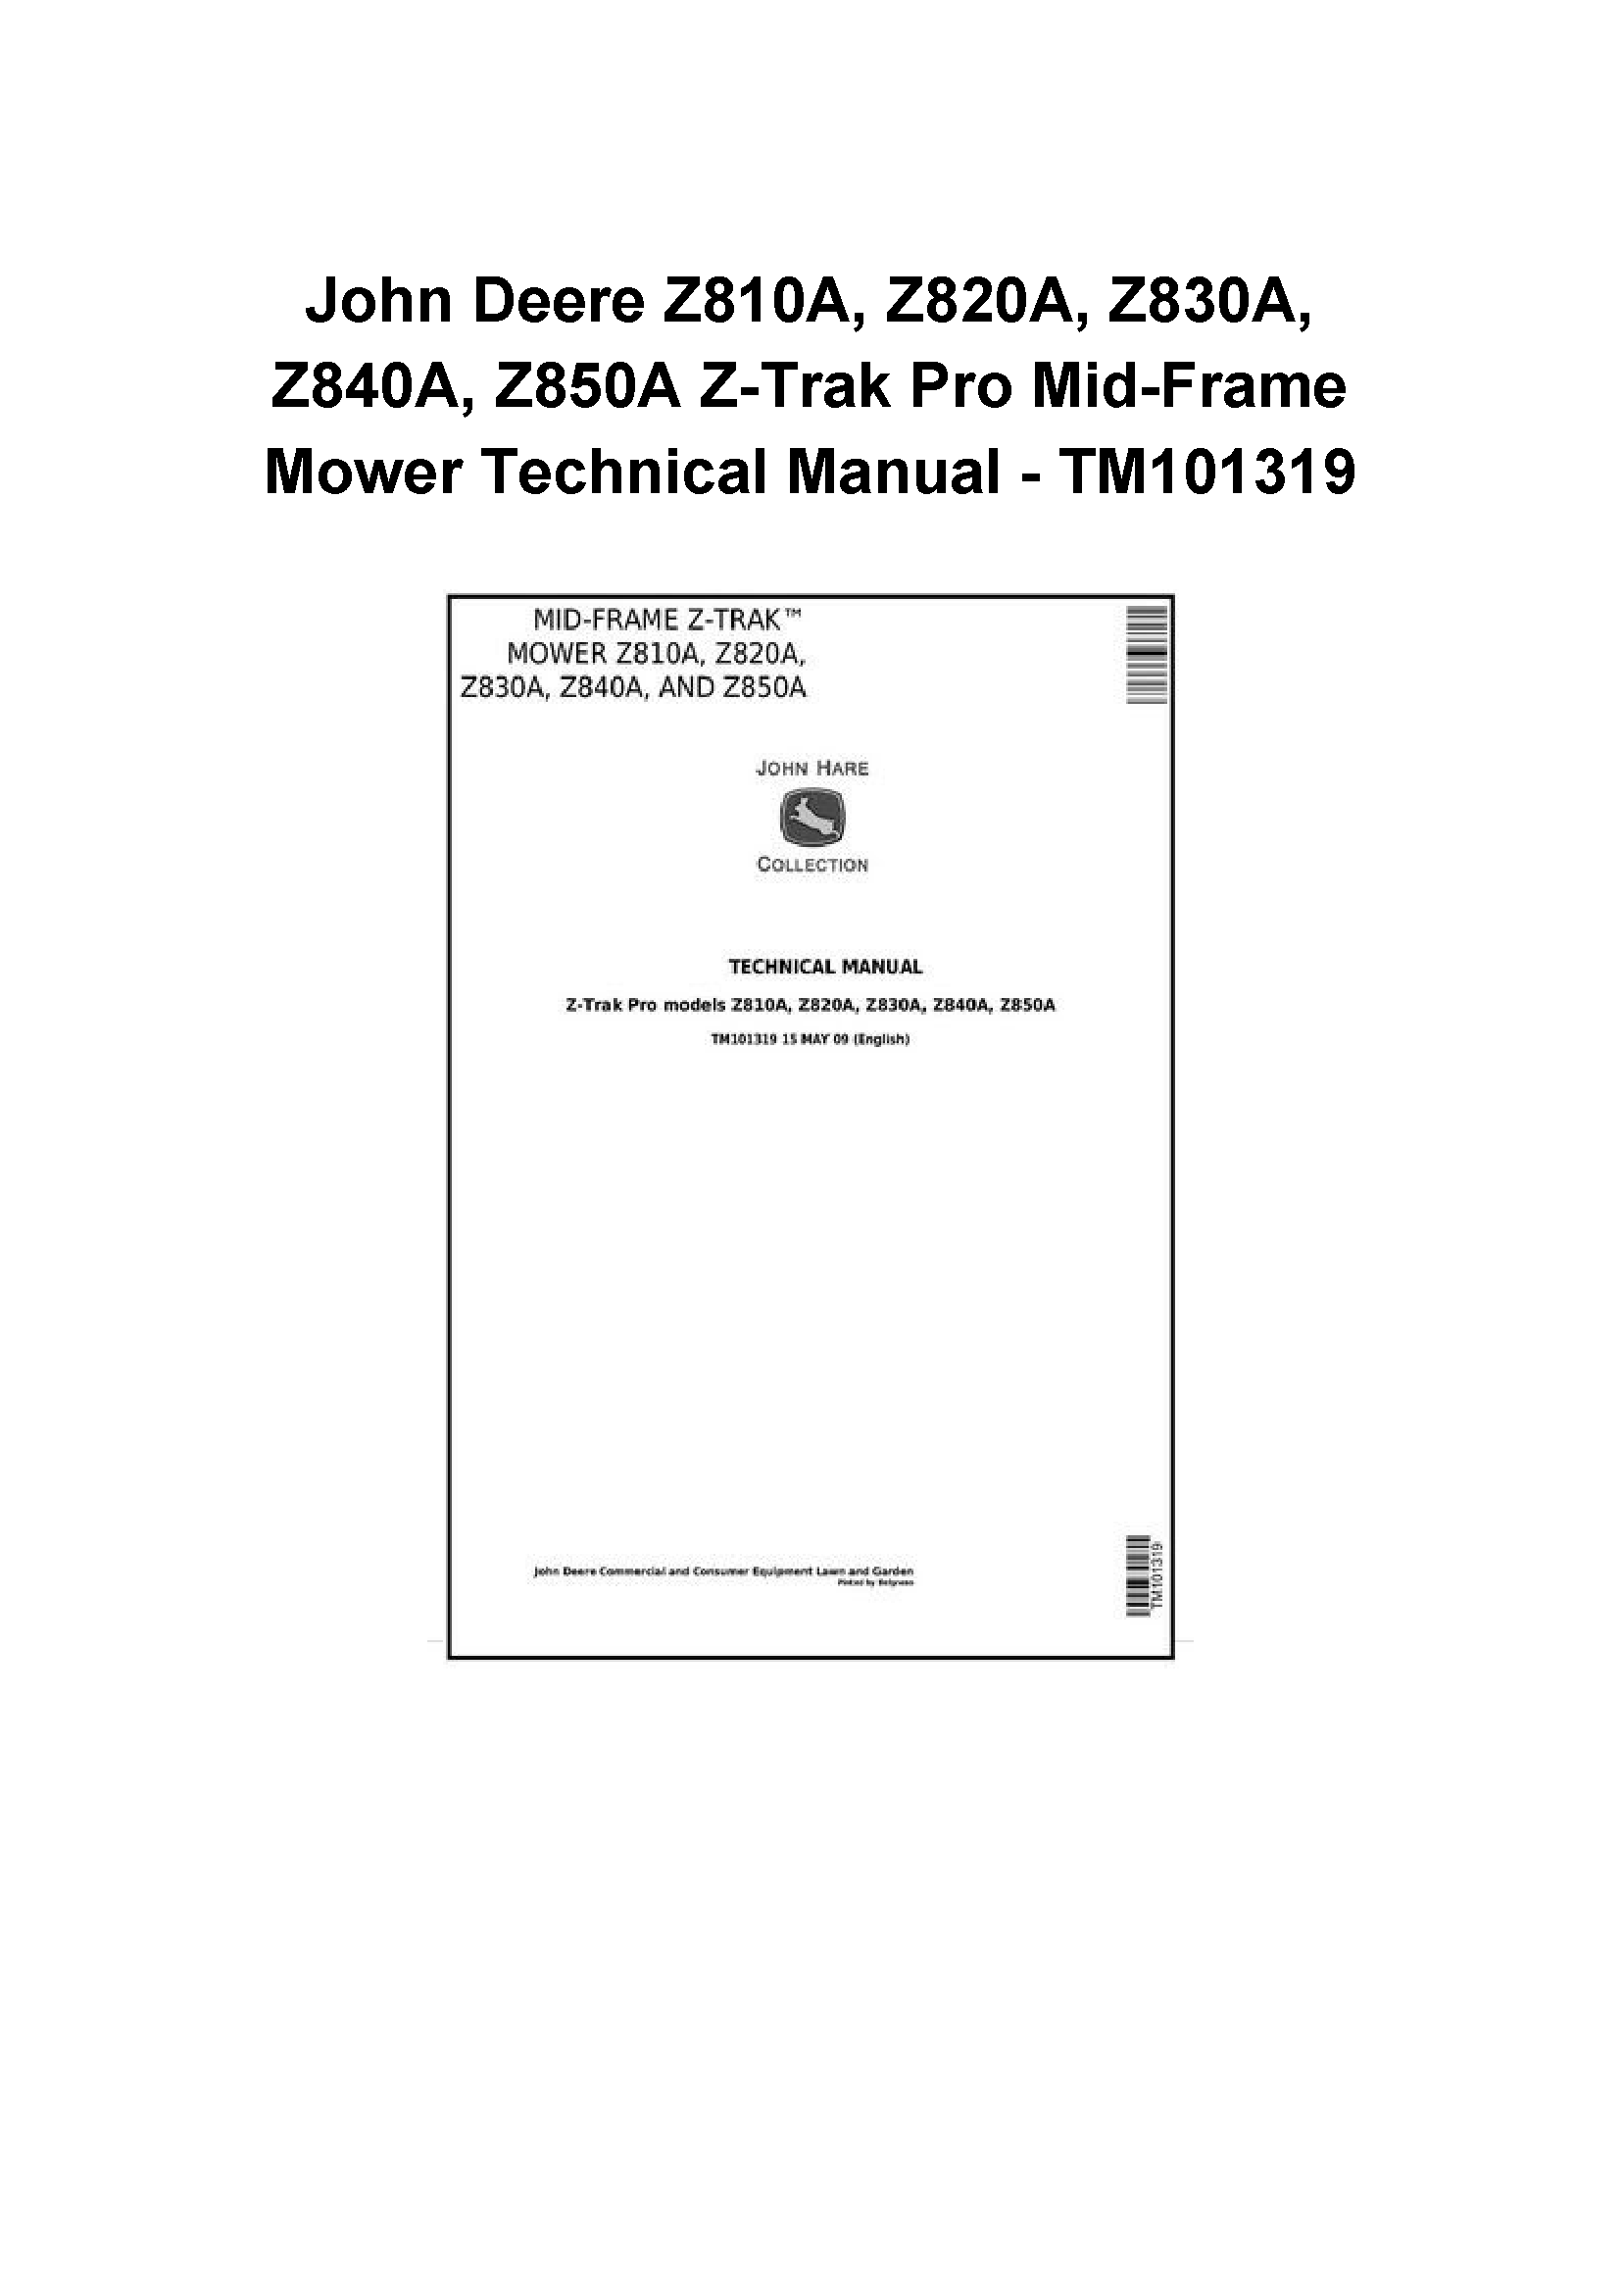 John Deere Z810A, Z820A, Z830A, Z840A, Z850A Z-Trak Pro Mid-Frame Mower Technical Manual - TM101319